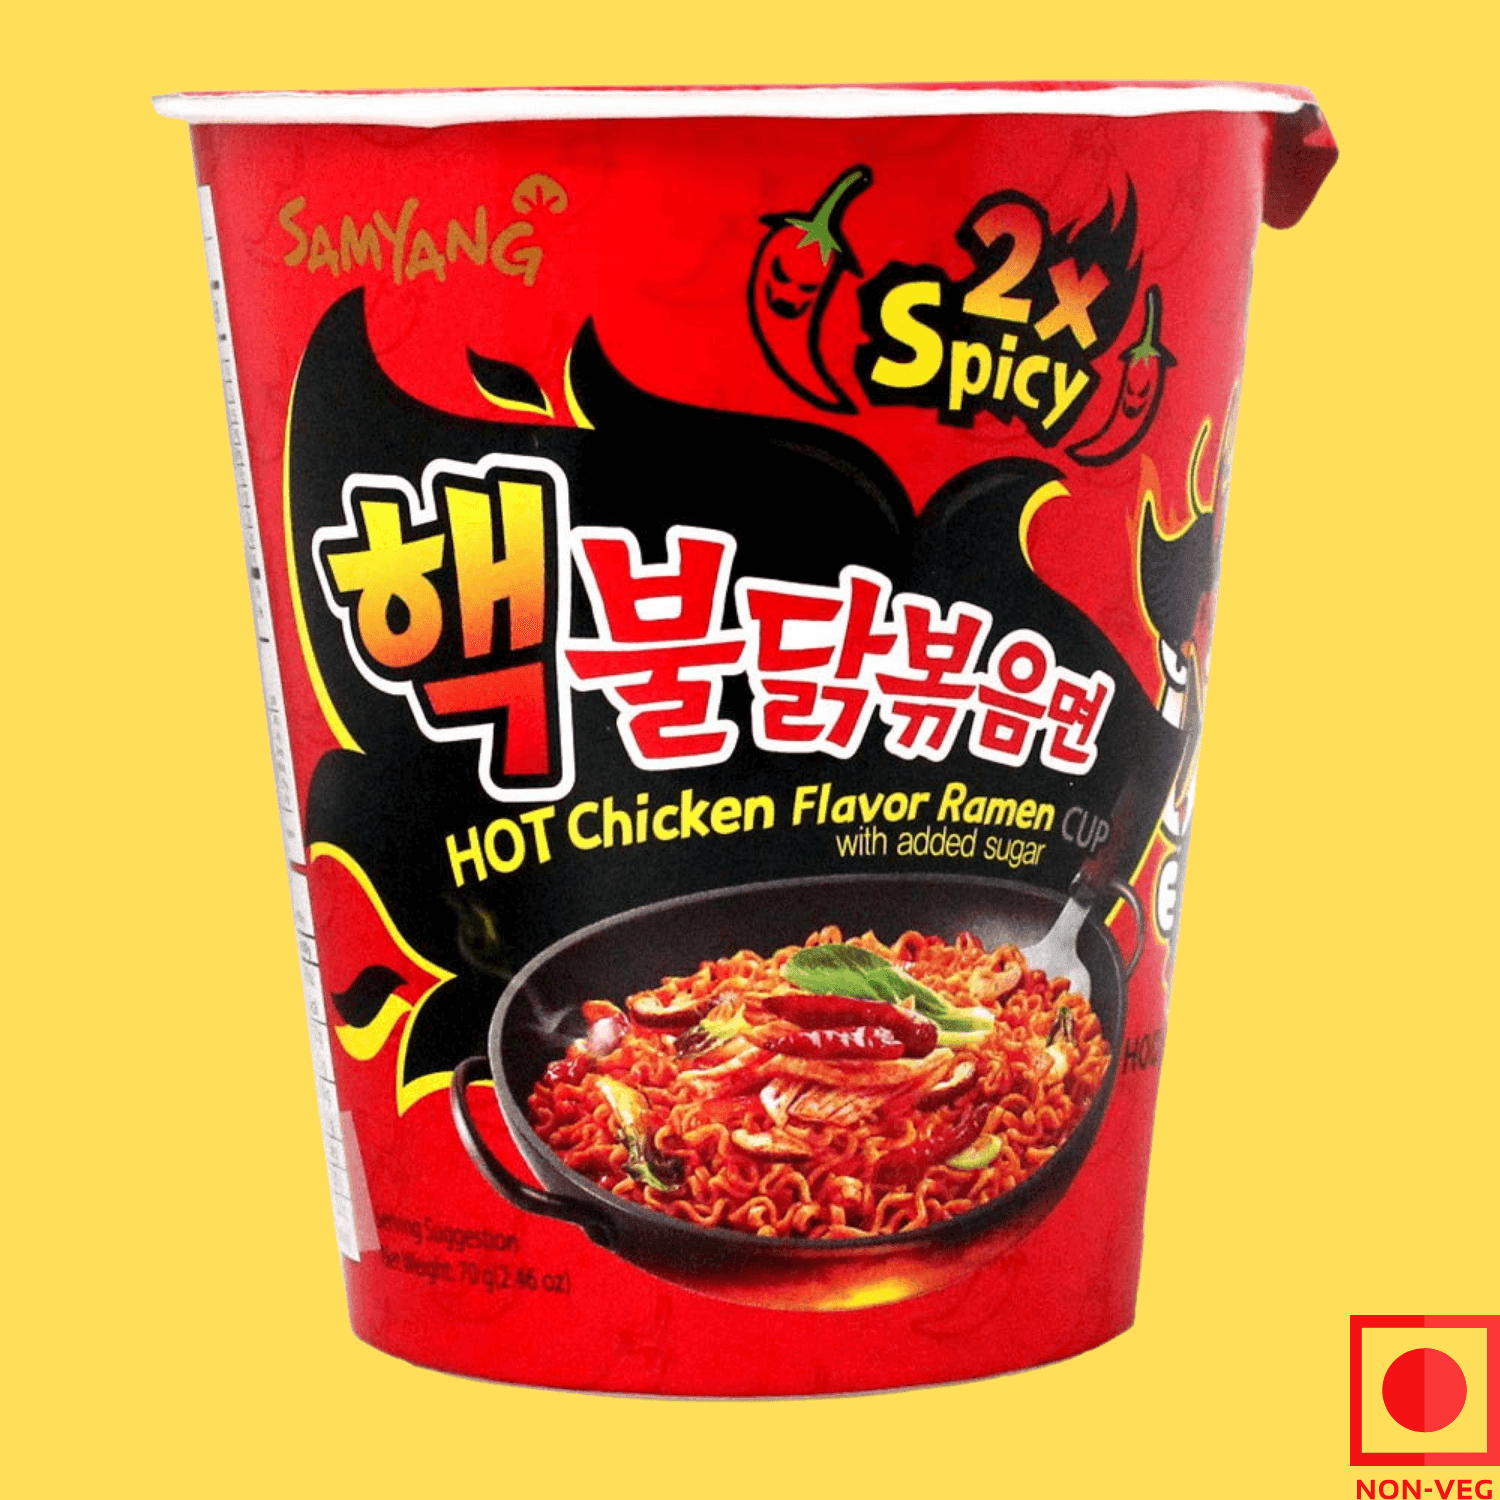 Samyang Spicy HOT Chicken Flavor Ramen Cup 70g (Imported)